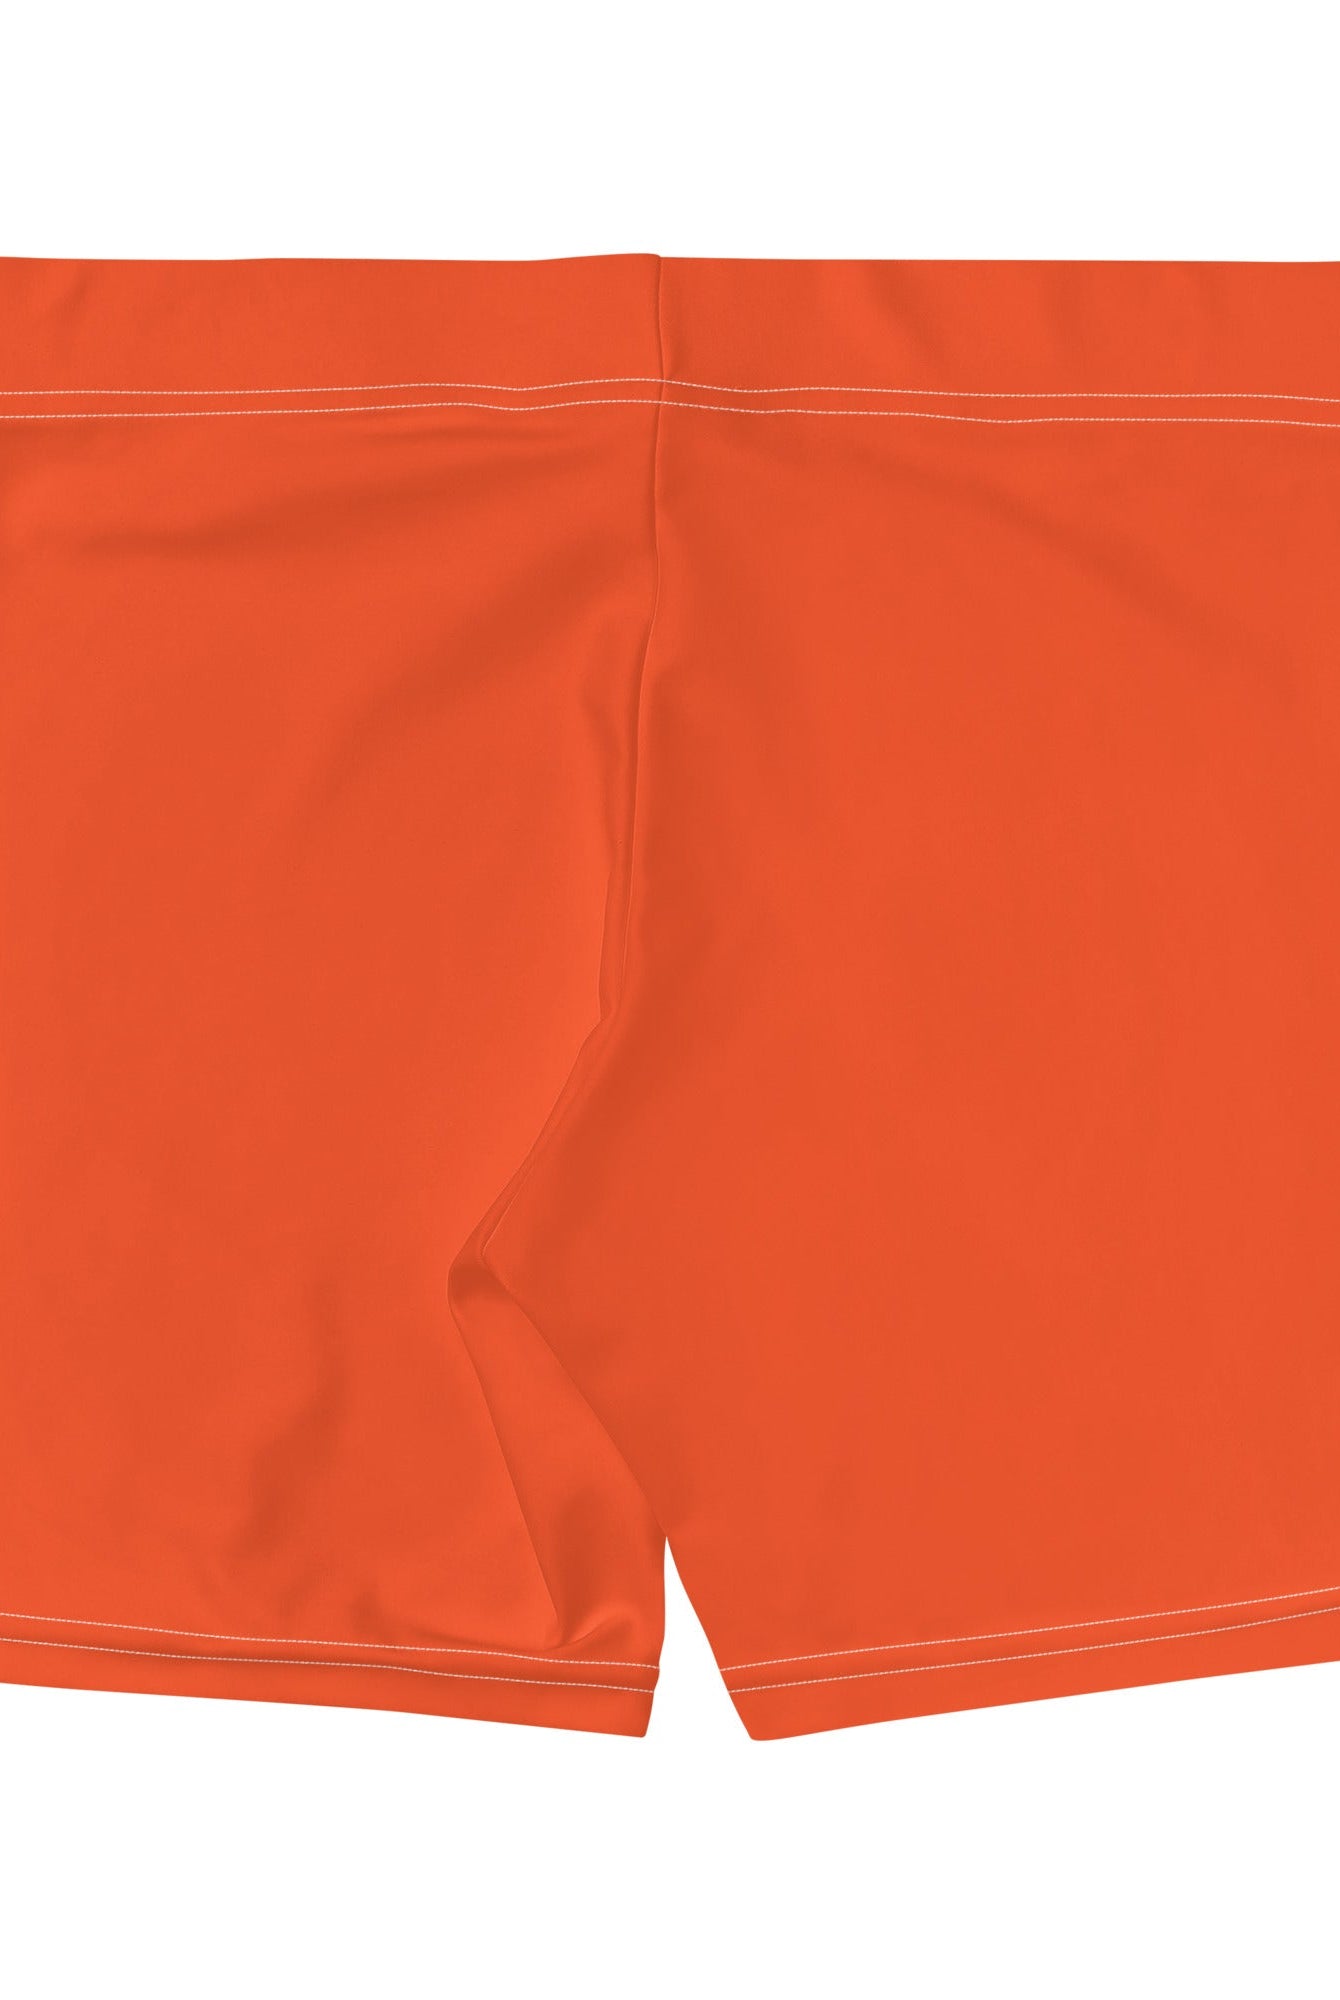 Outrageous Orange Gym Shorts - Women's Gym Shorts - DRAGON FOXX™ - Outrageous Orange Gym Shorts - 7714971_9296 - XS - Outrageous Orange - Gym Shorts - Dragon Foxx™ - Dragon Foxx™ Gym Shorts - Dragon Foxx™ Outrageous Orange Gym Shorts